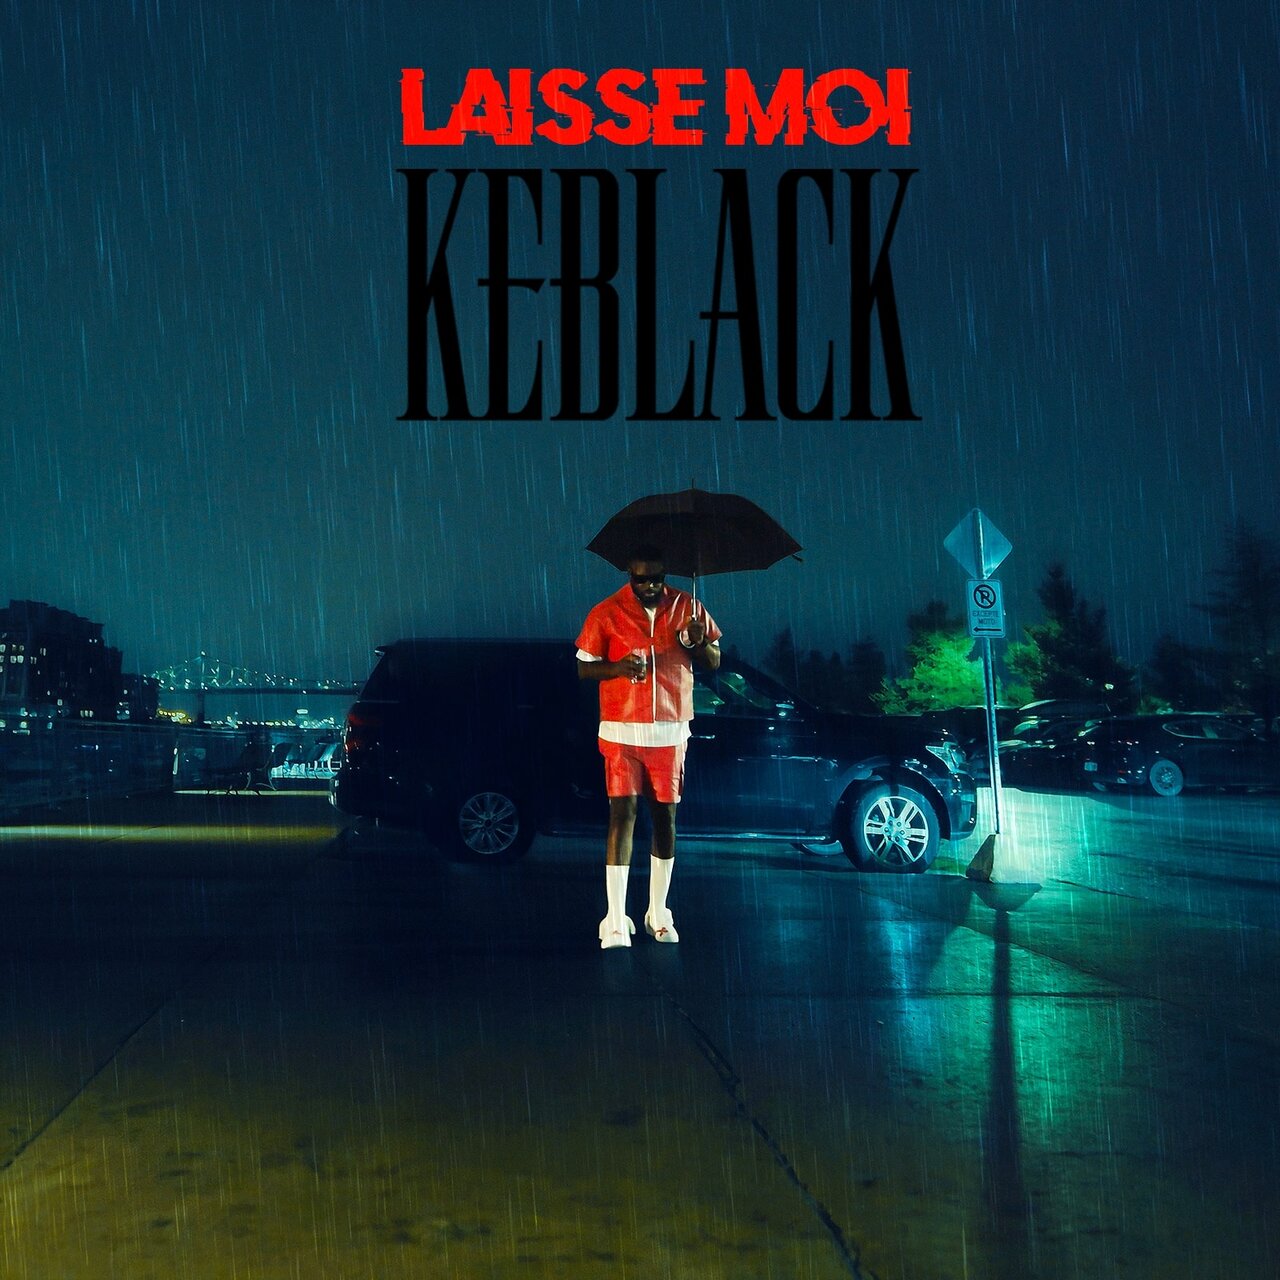 KeBlack - Laisse-moi (Cover)